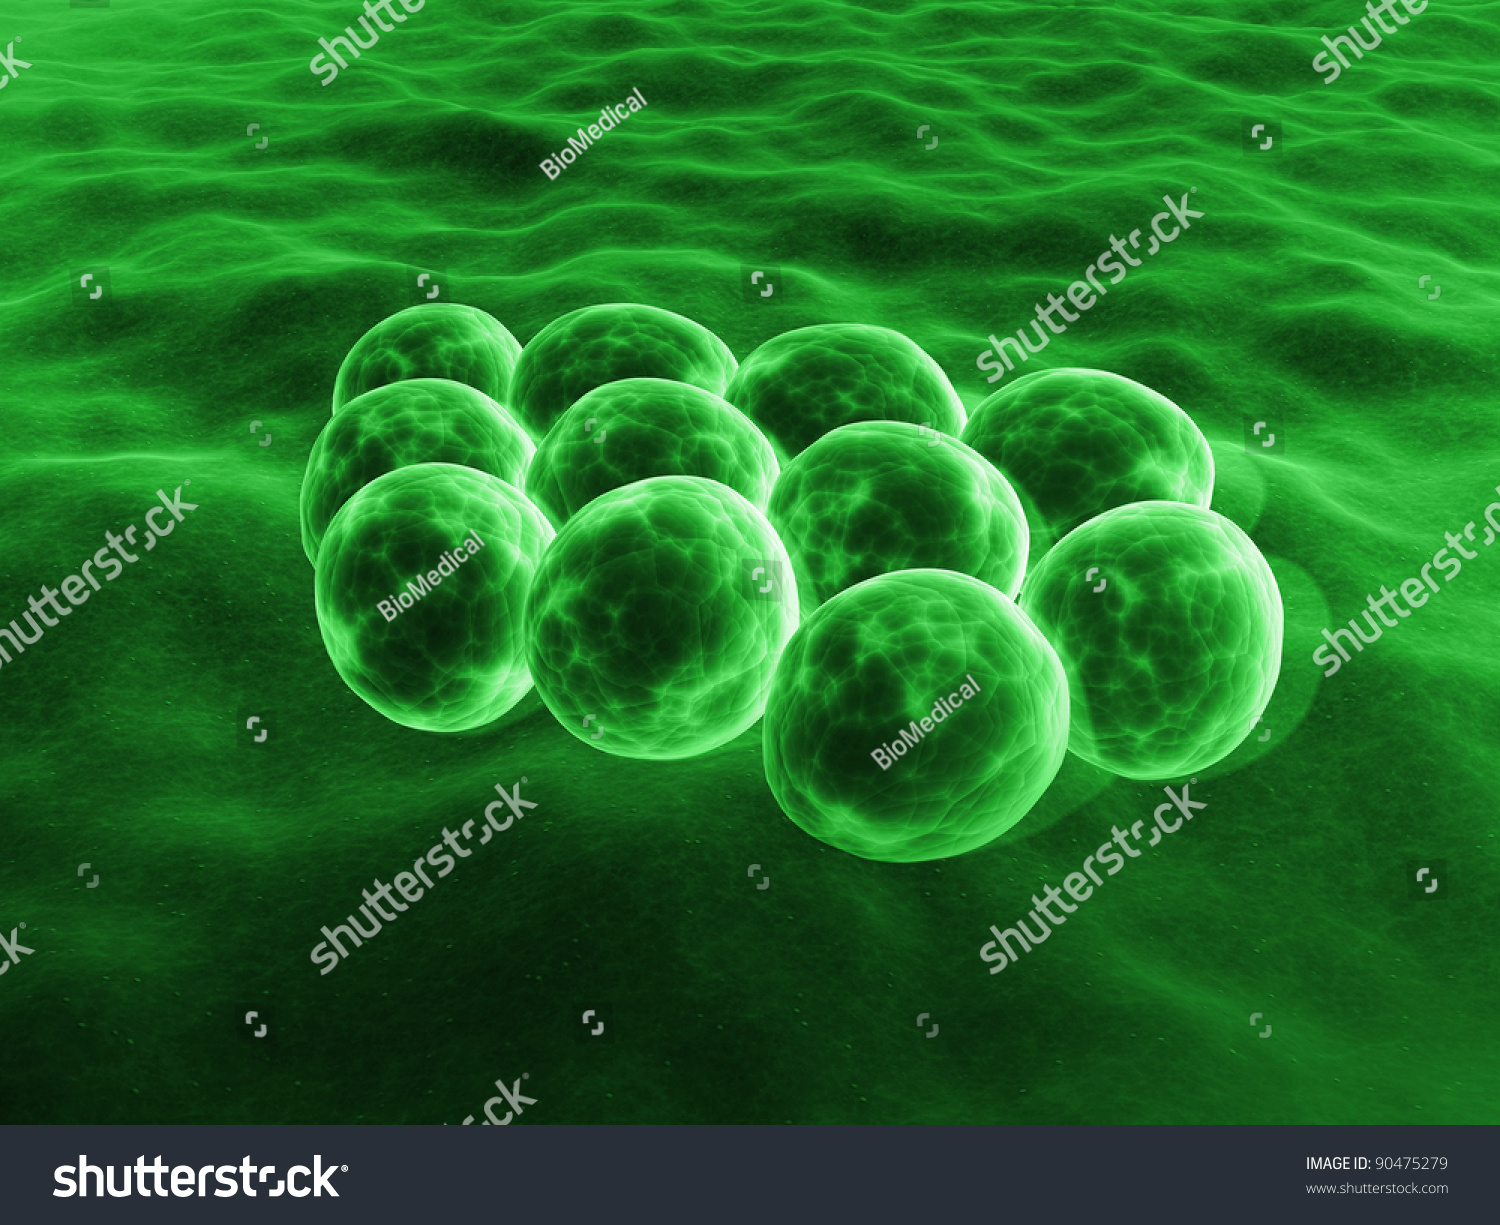 Mrsa Bacteria Stock Photo 90475279 : Shutterstock